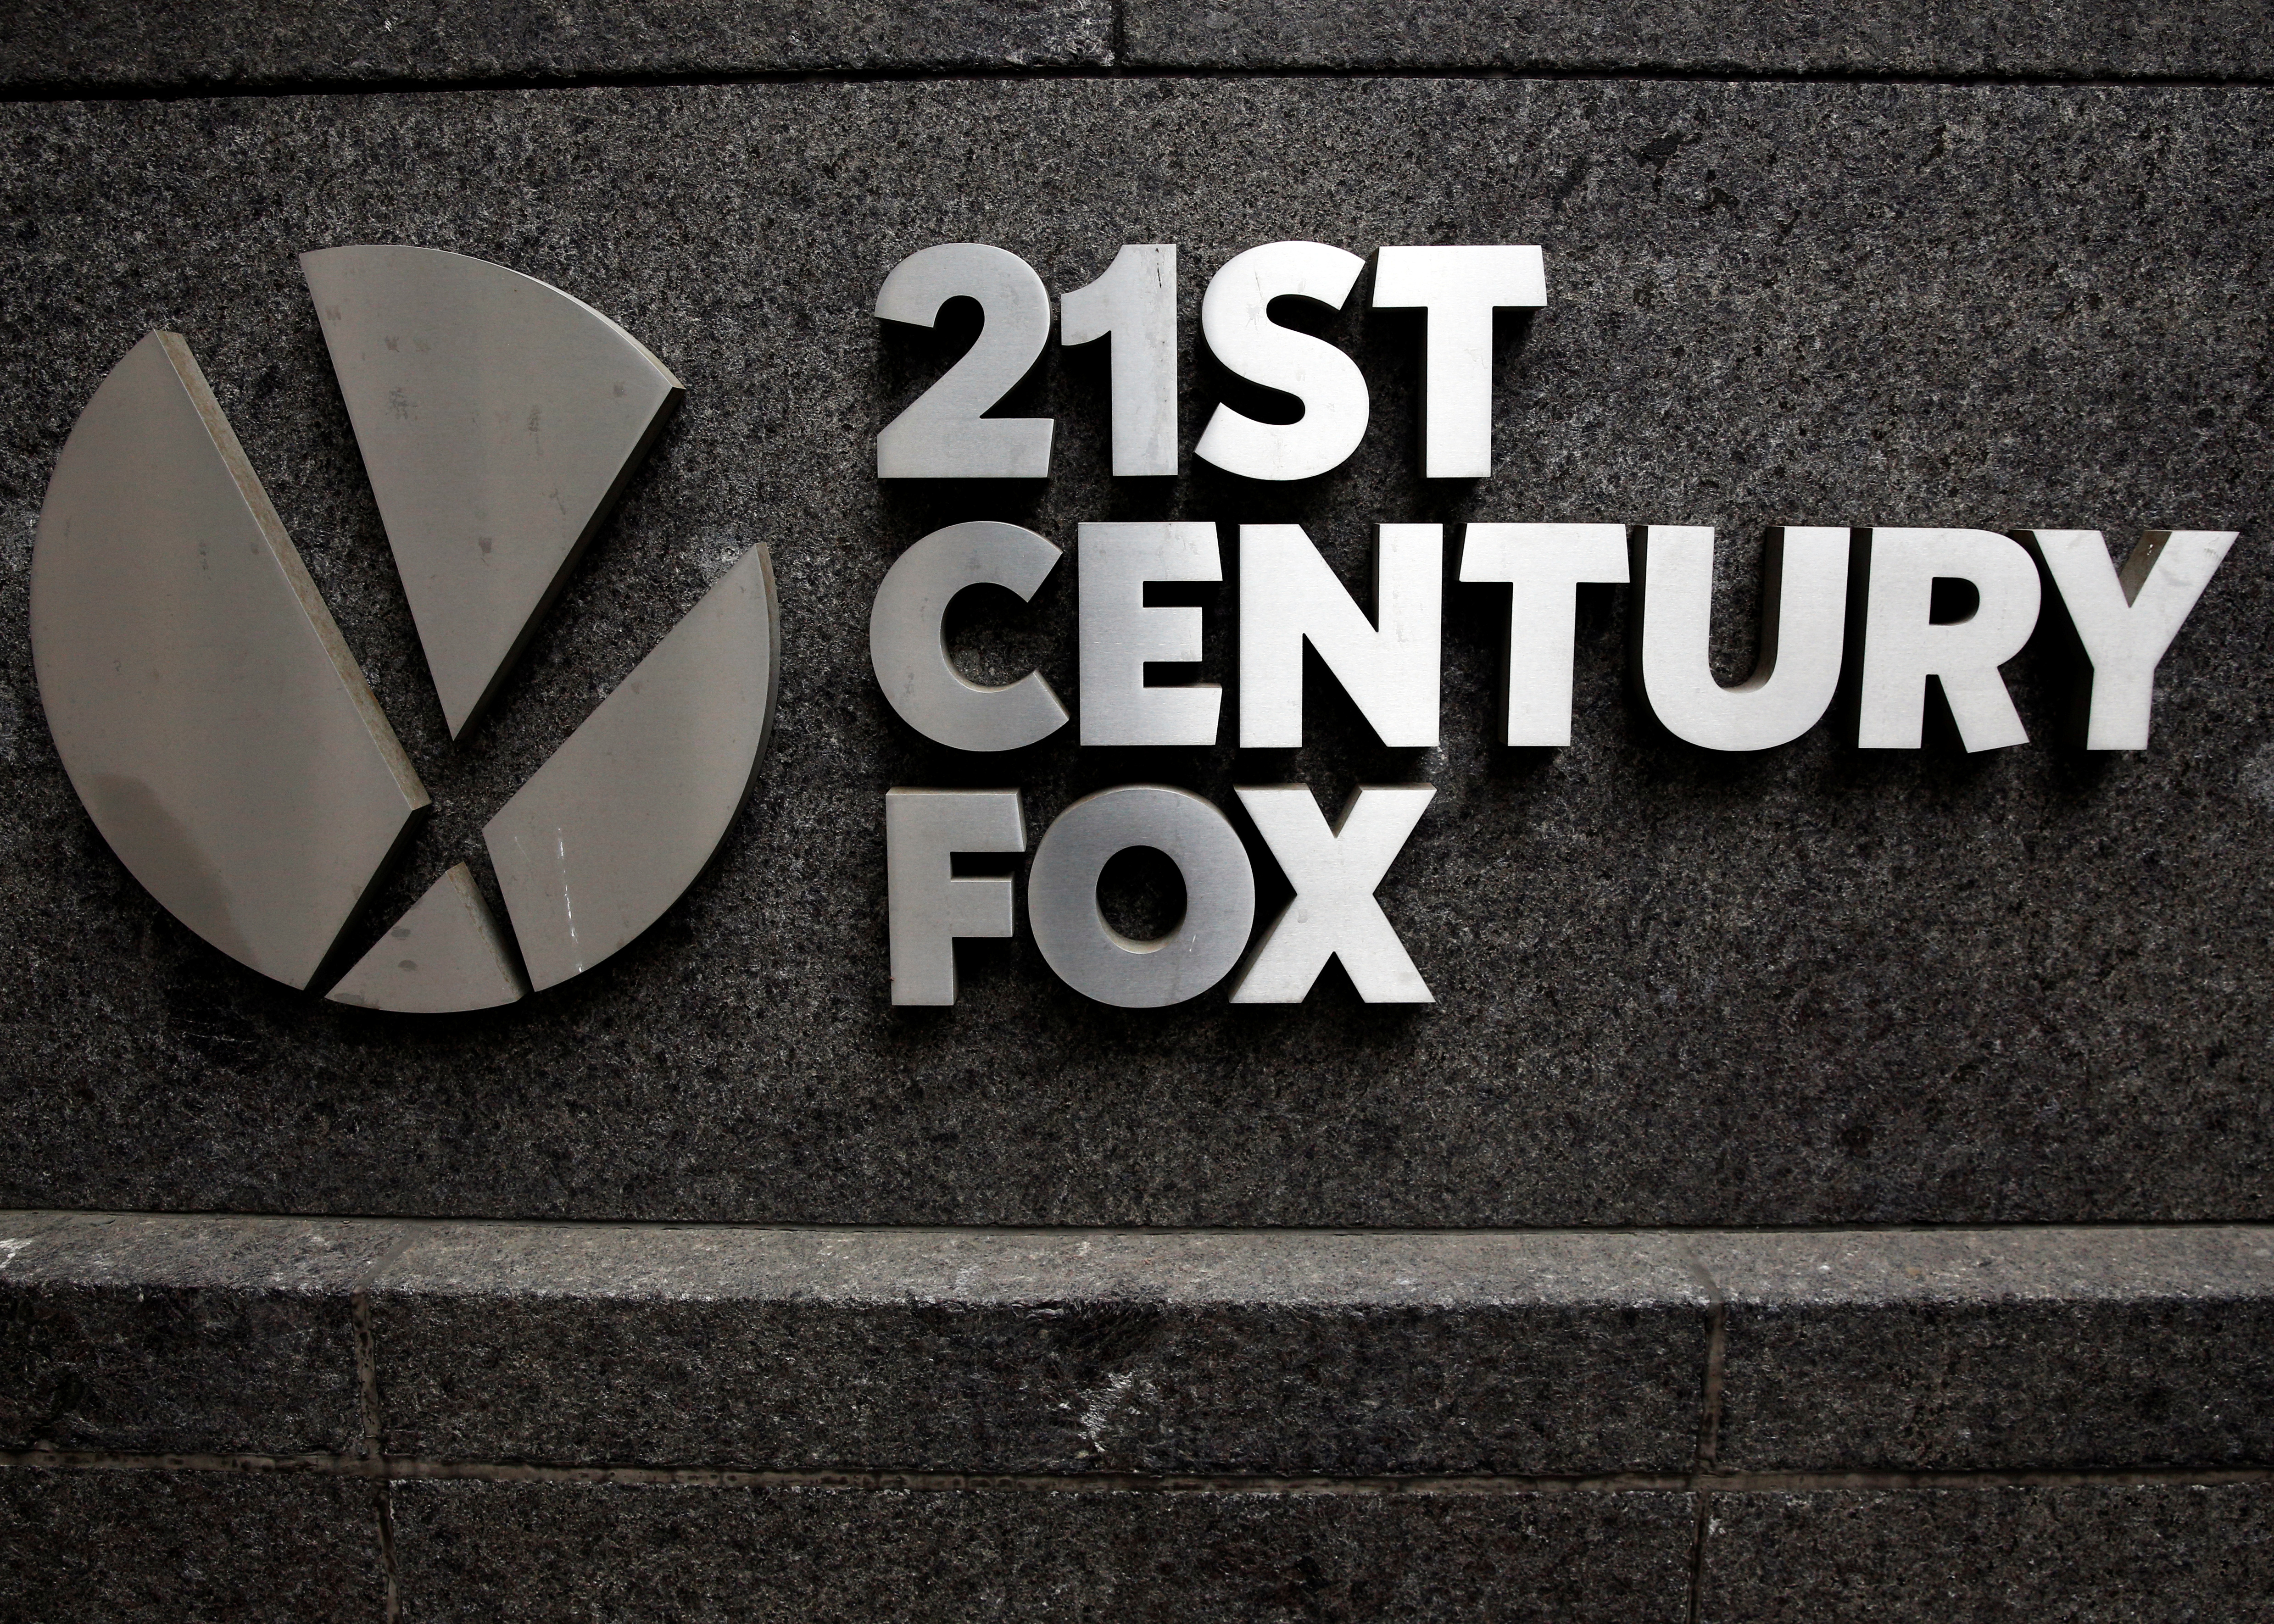 The 21st Century Fox logo in New York